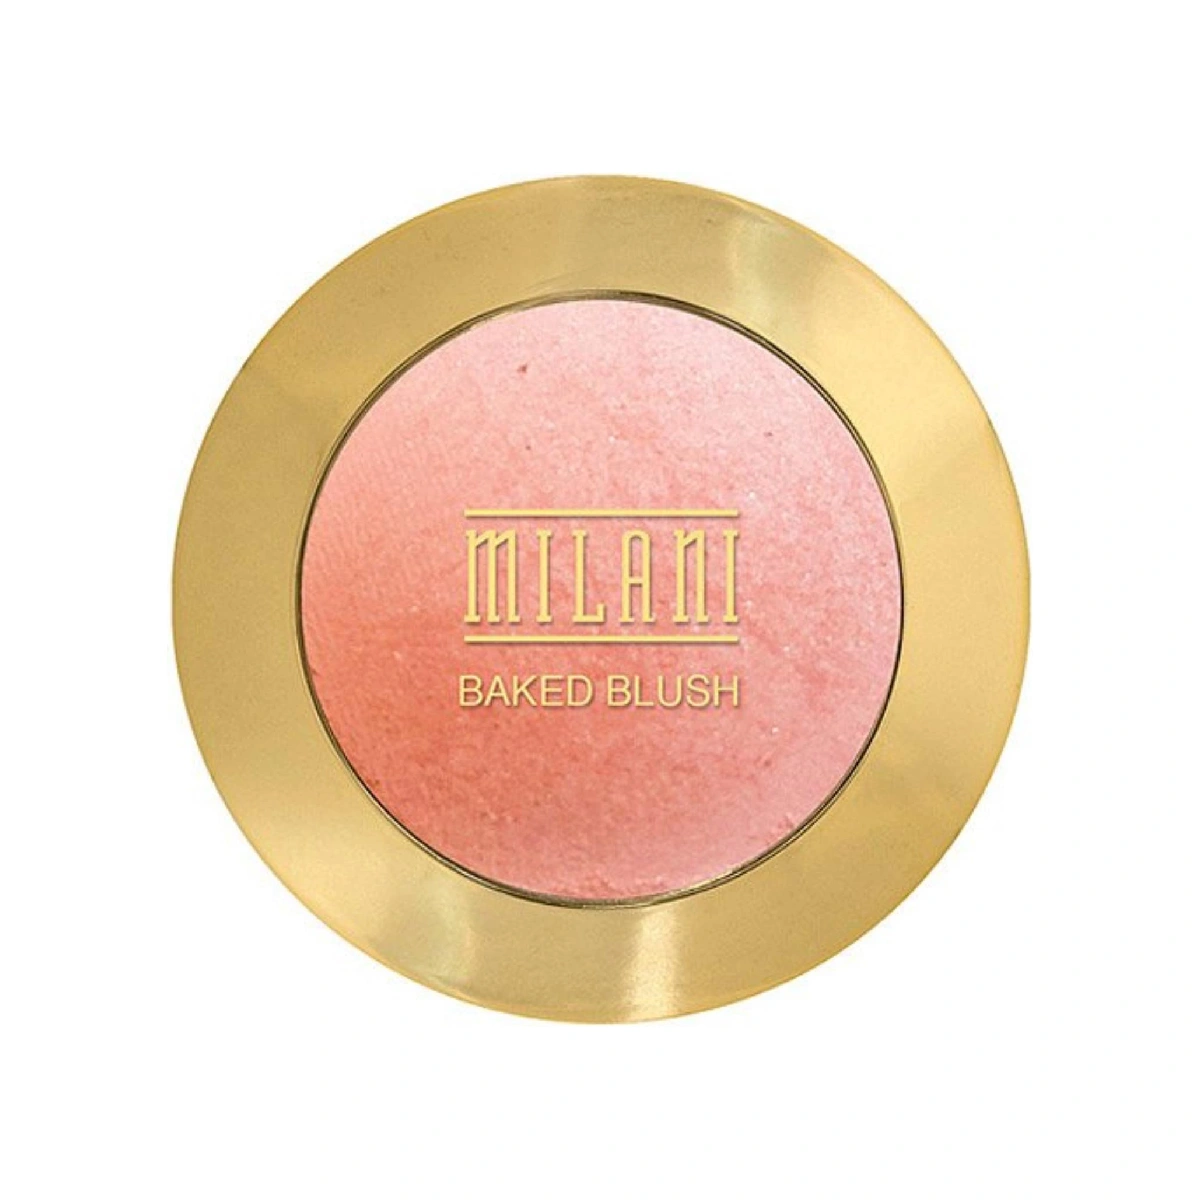 Milani Baked Powder Blush - a radiant blush compact on a white background